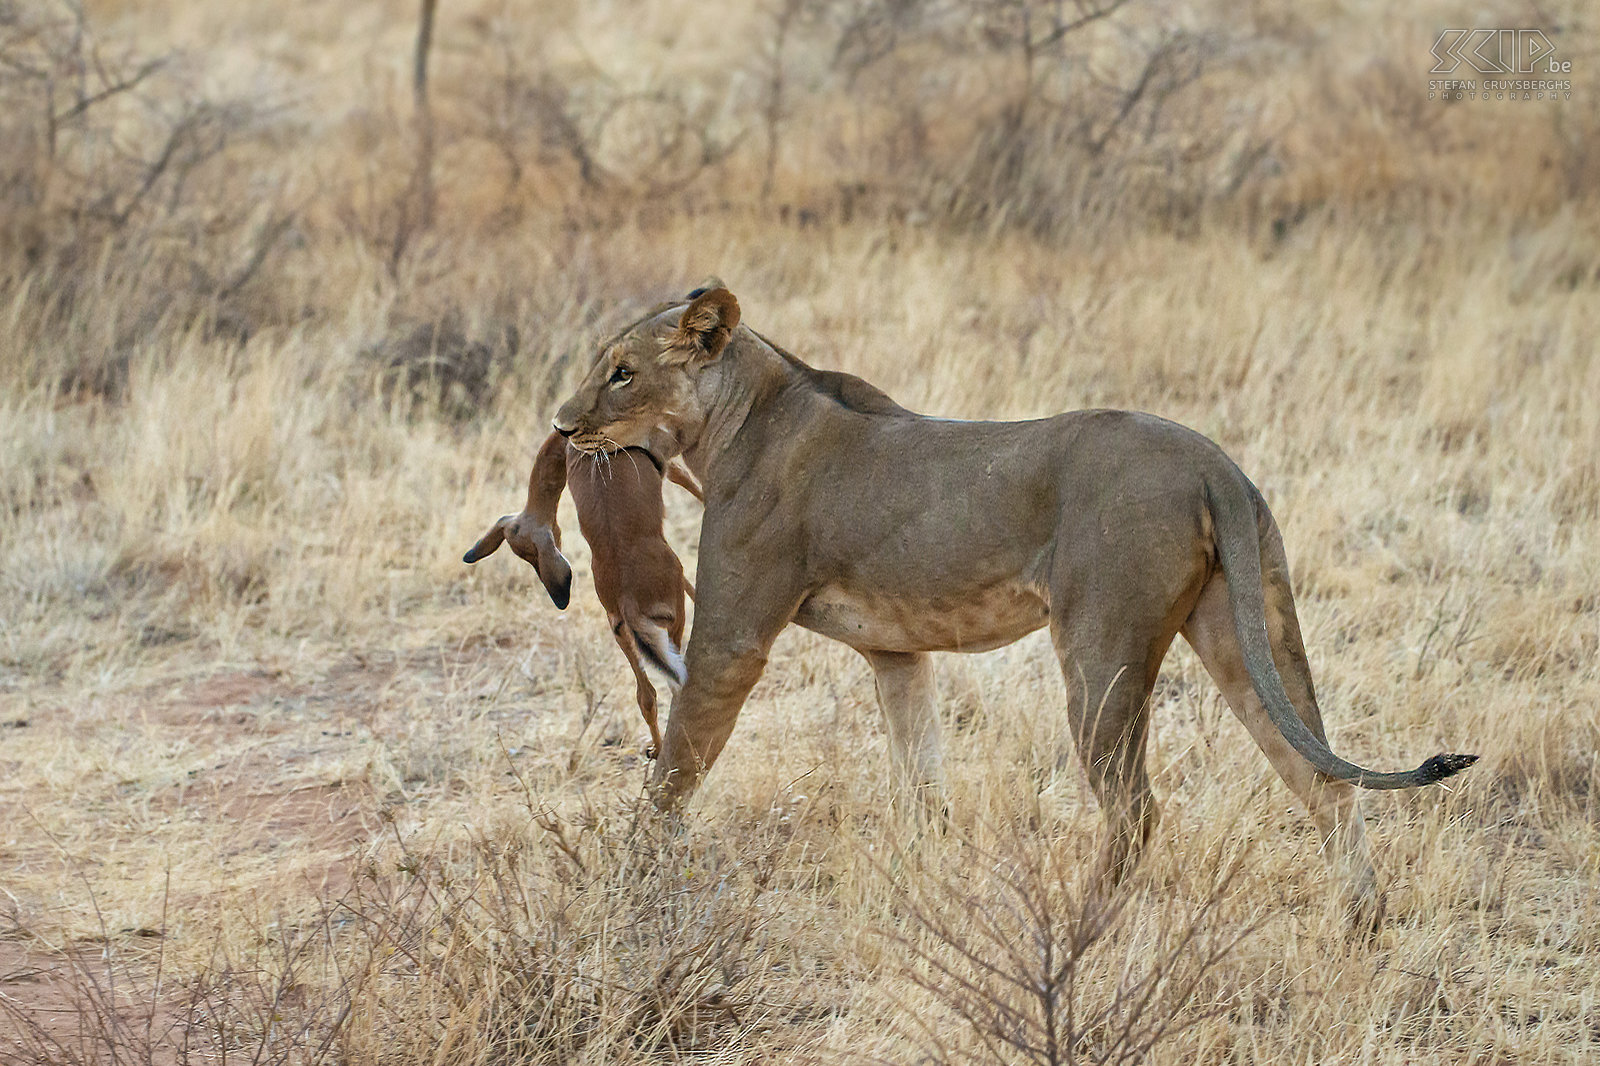 Samburu - Leeuwin met dode impala Vlak na zonsondergang kwamen we ook nog een leeuwin tegen die een jonge impala gedood had en dit dier nu in haar bek meesleurde. Stefan Cruysberghs